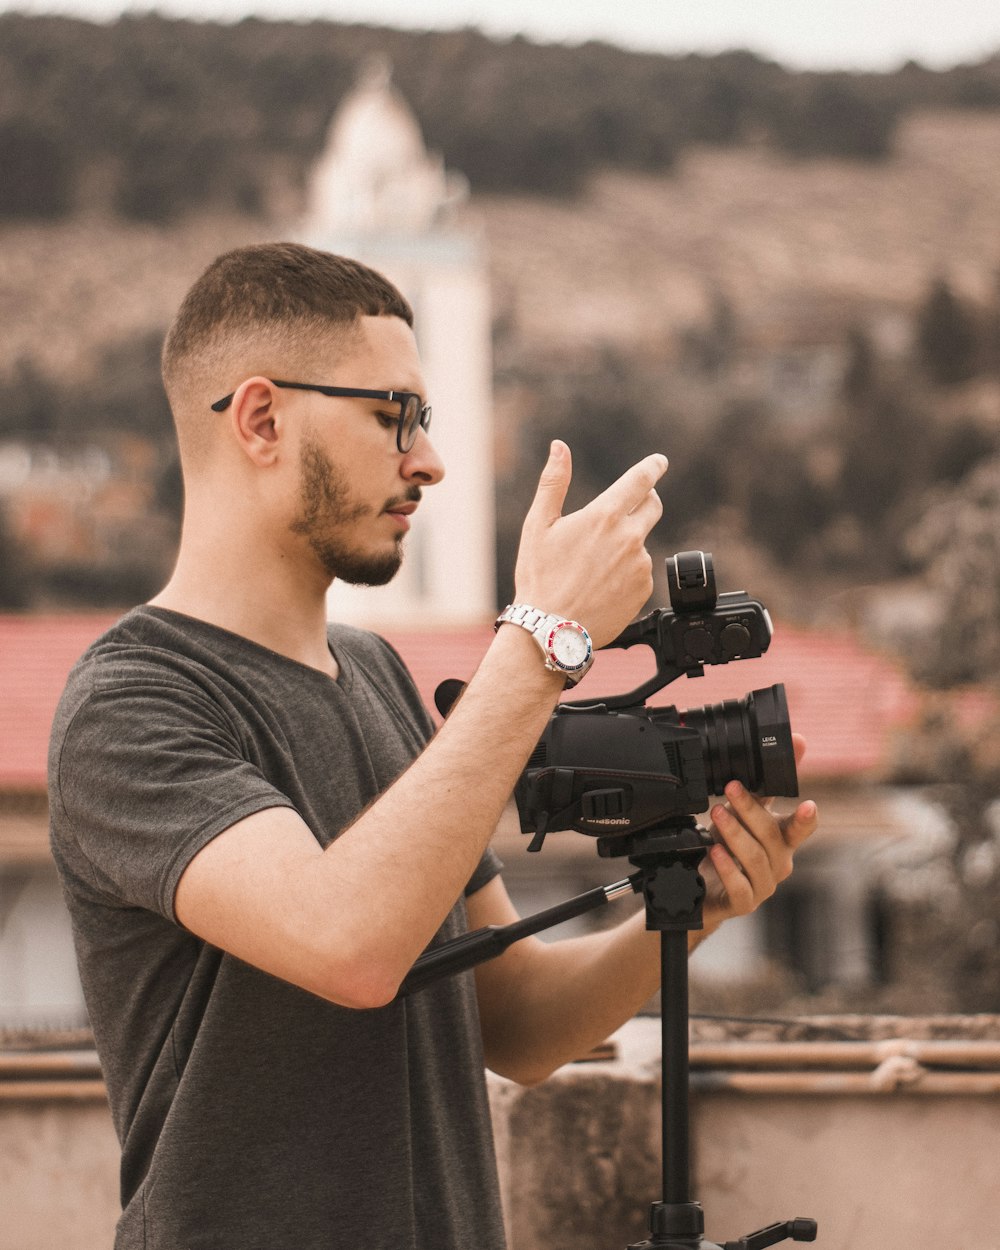 a man standing next to a camera on a tripod